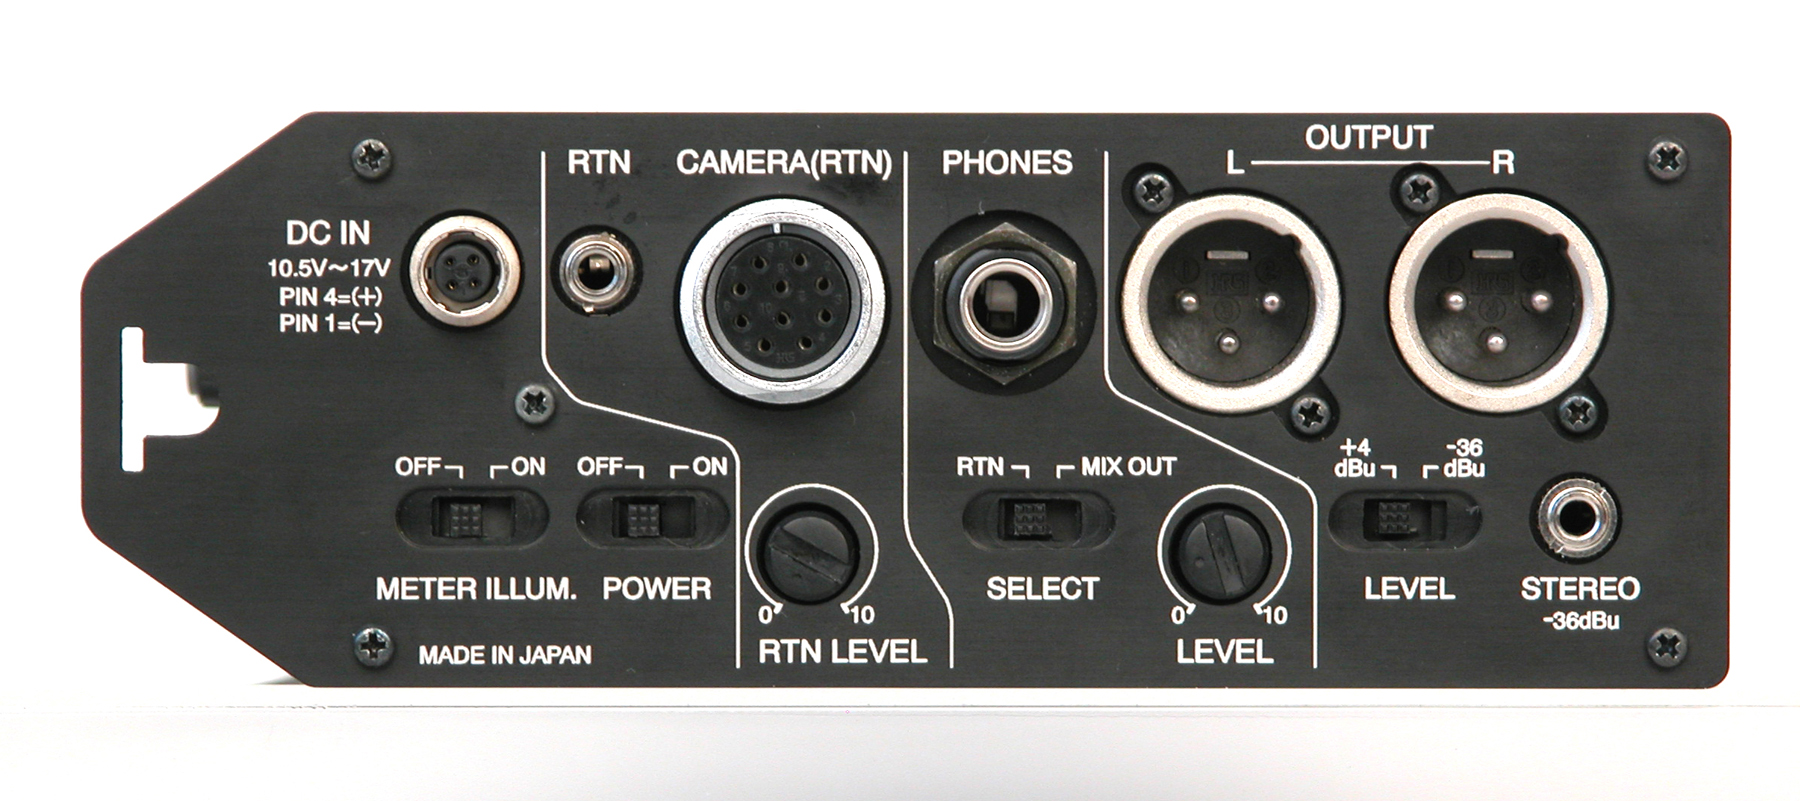 Azden FMX-42a 4-Channel Microphone Field Mixer มิกเซอร์ภาคสนามสำหรับงานระดับมืออาชีพ  4 อินพุท Phantom Power ราคา 21900 บาท